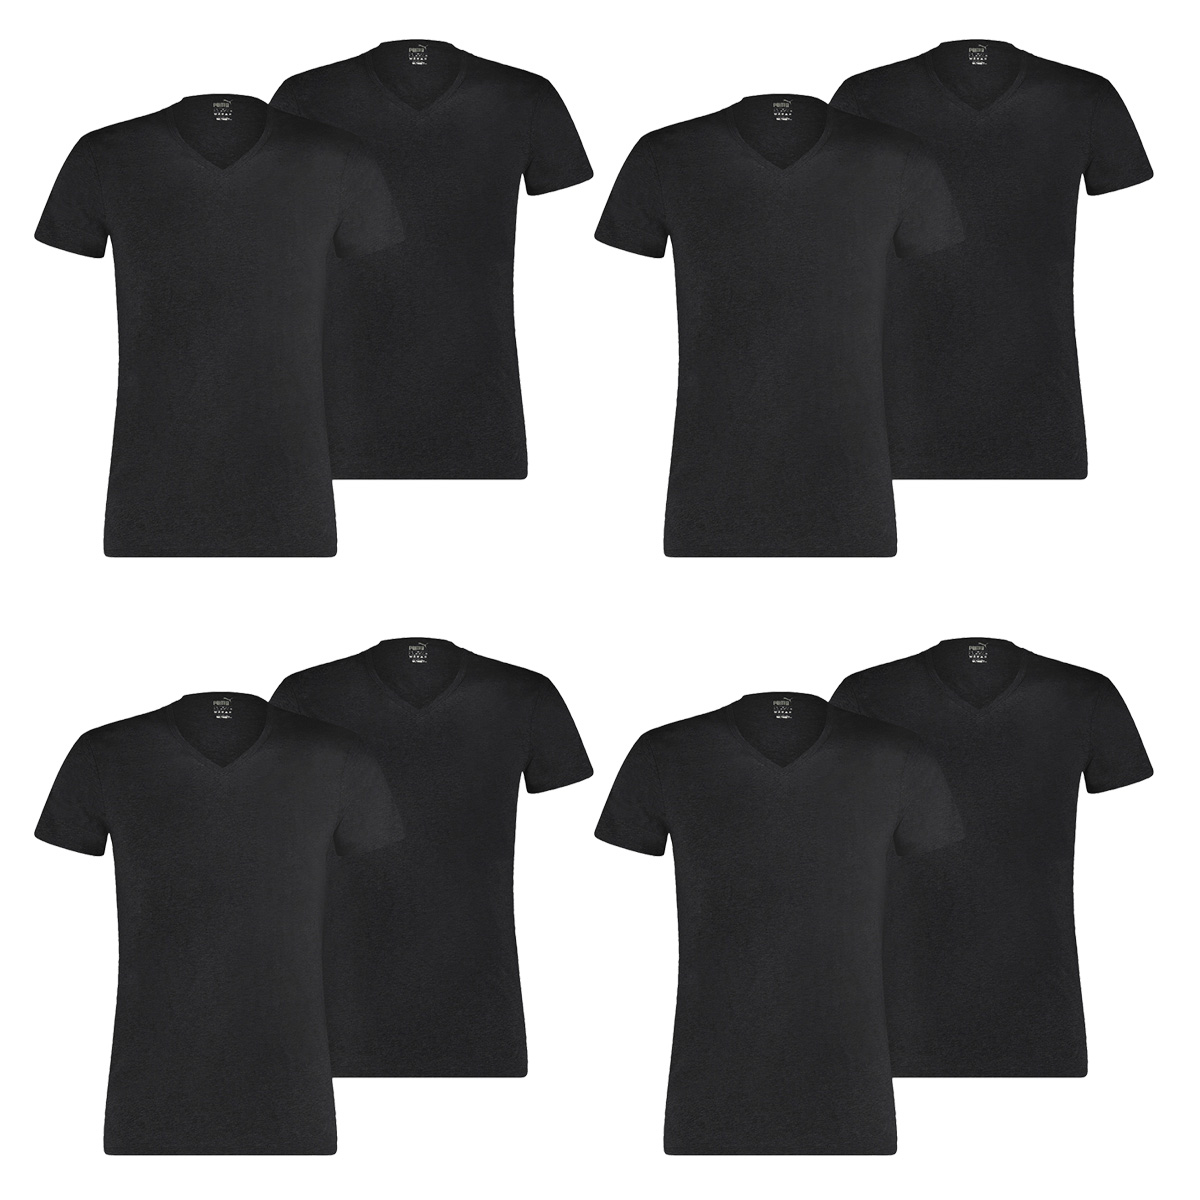 8 er Pack Puma Basic V Neck T-Shirt Men Herren Unterhemd V-Ausschnitt von Puma